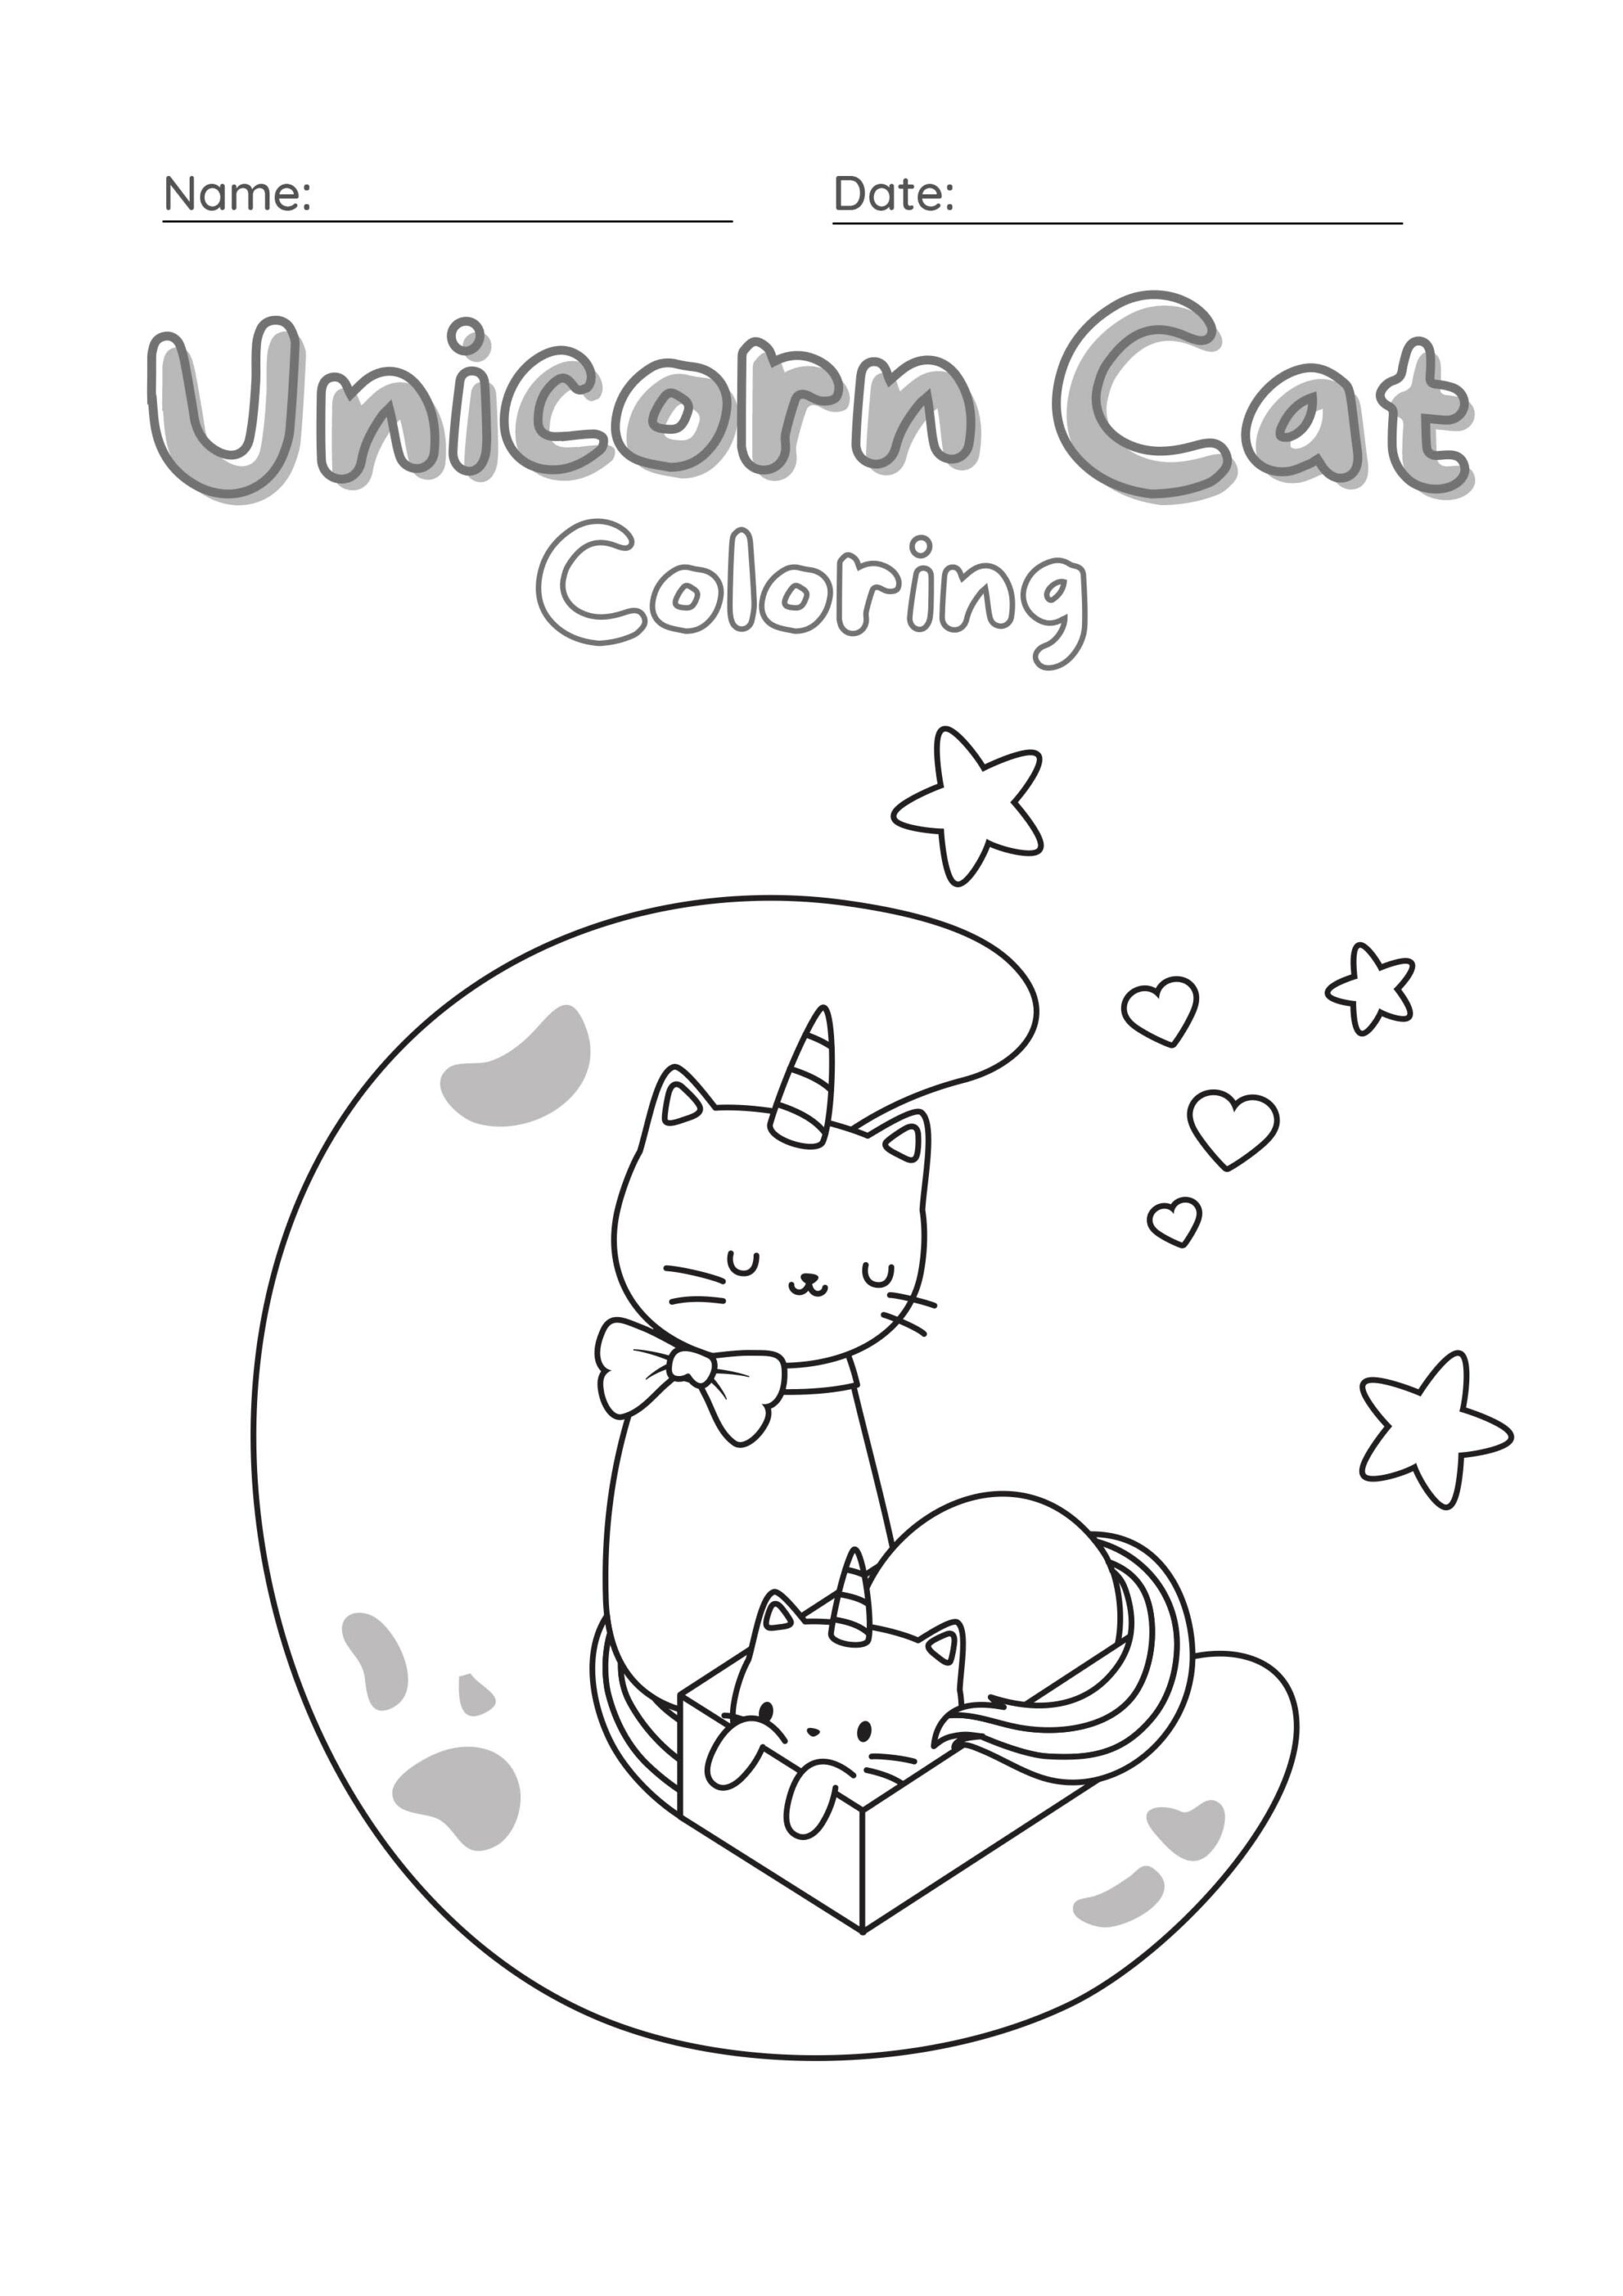 Unicorn Cat Coloring Worksheet Set 6